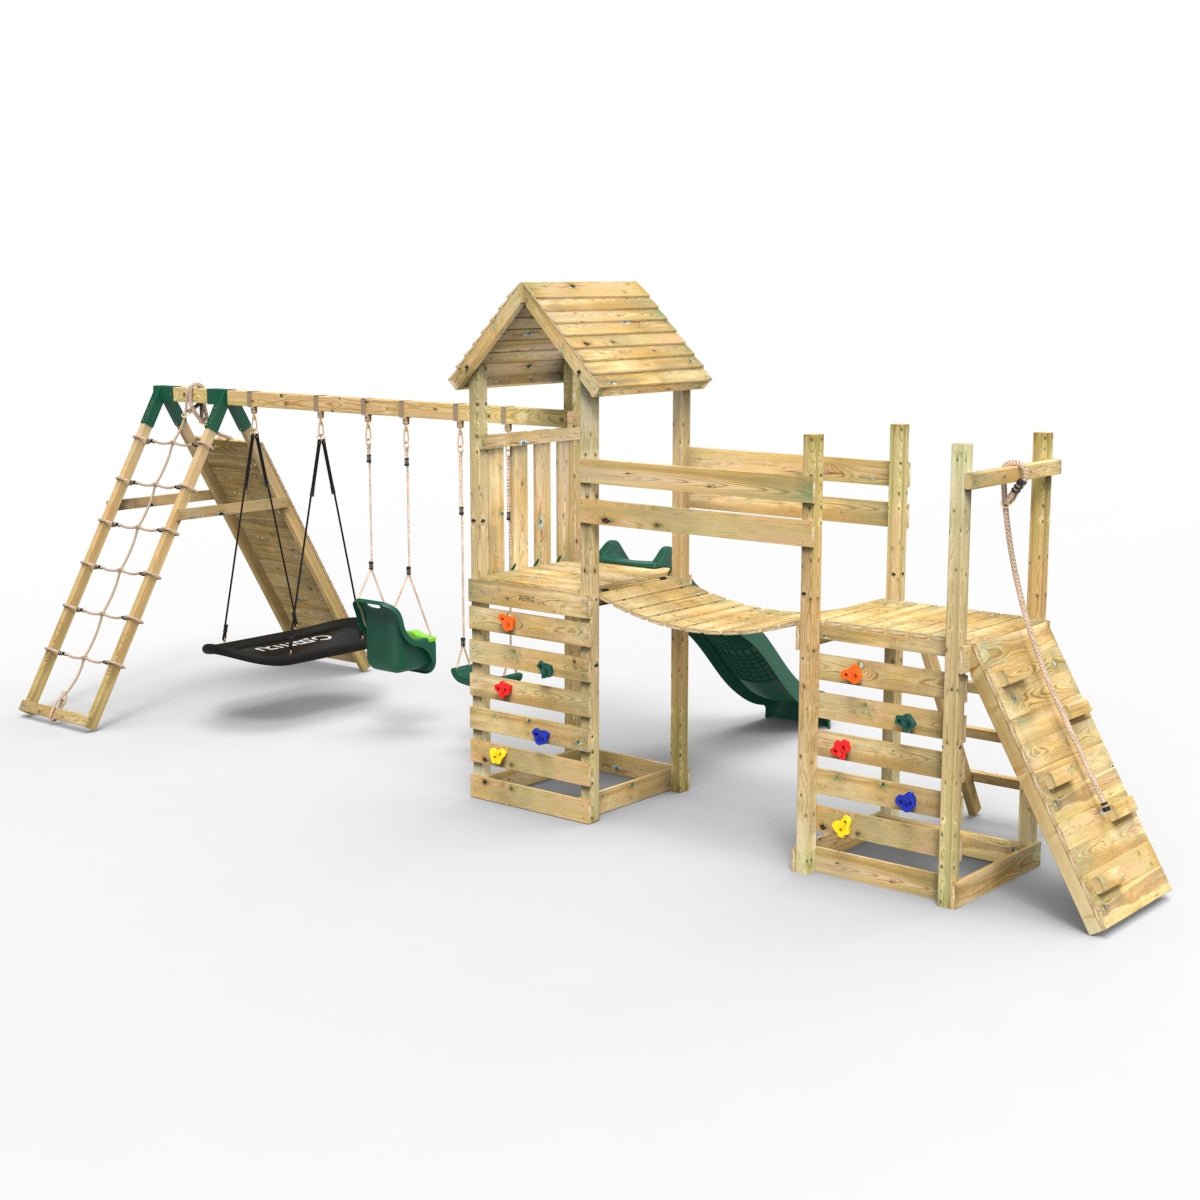 Rebo Double Tower Climbing Frame with Flexible Bridge, Swing & Slide - Sanford